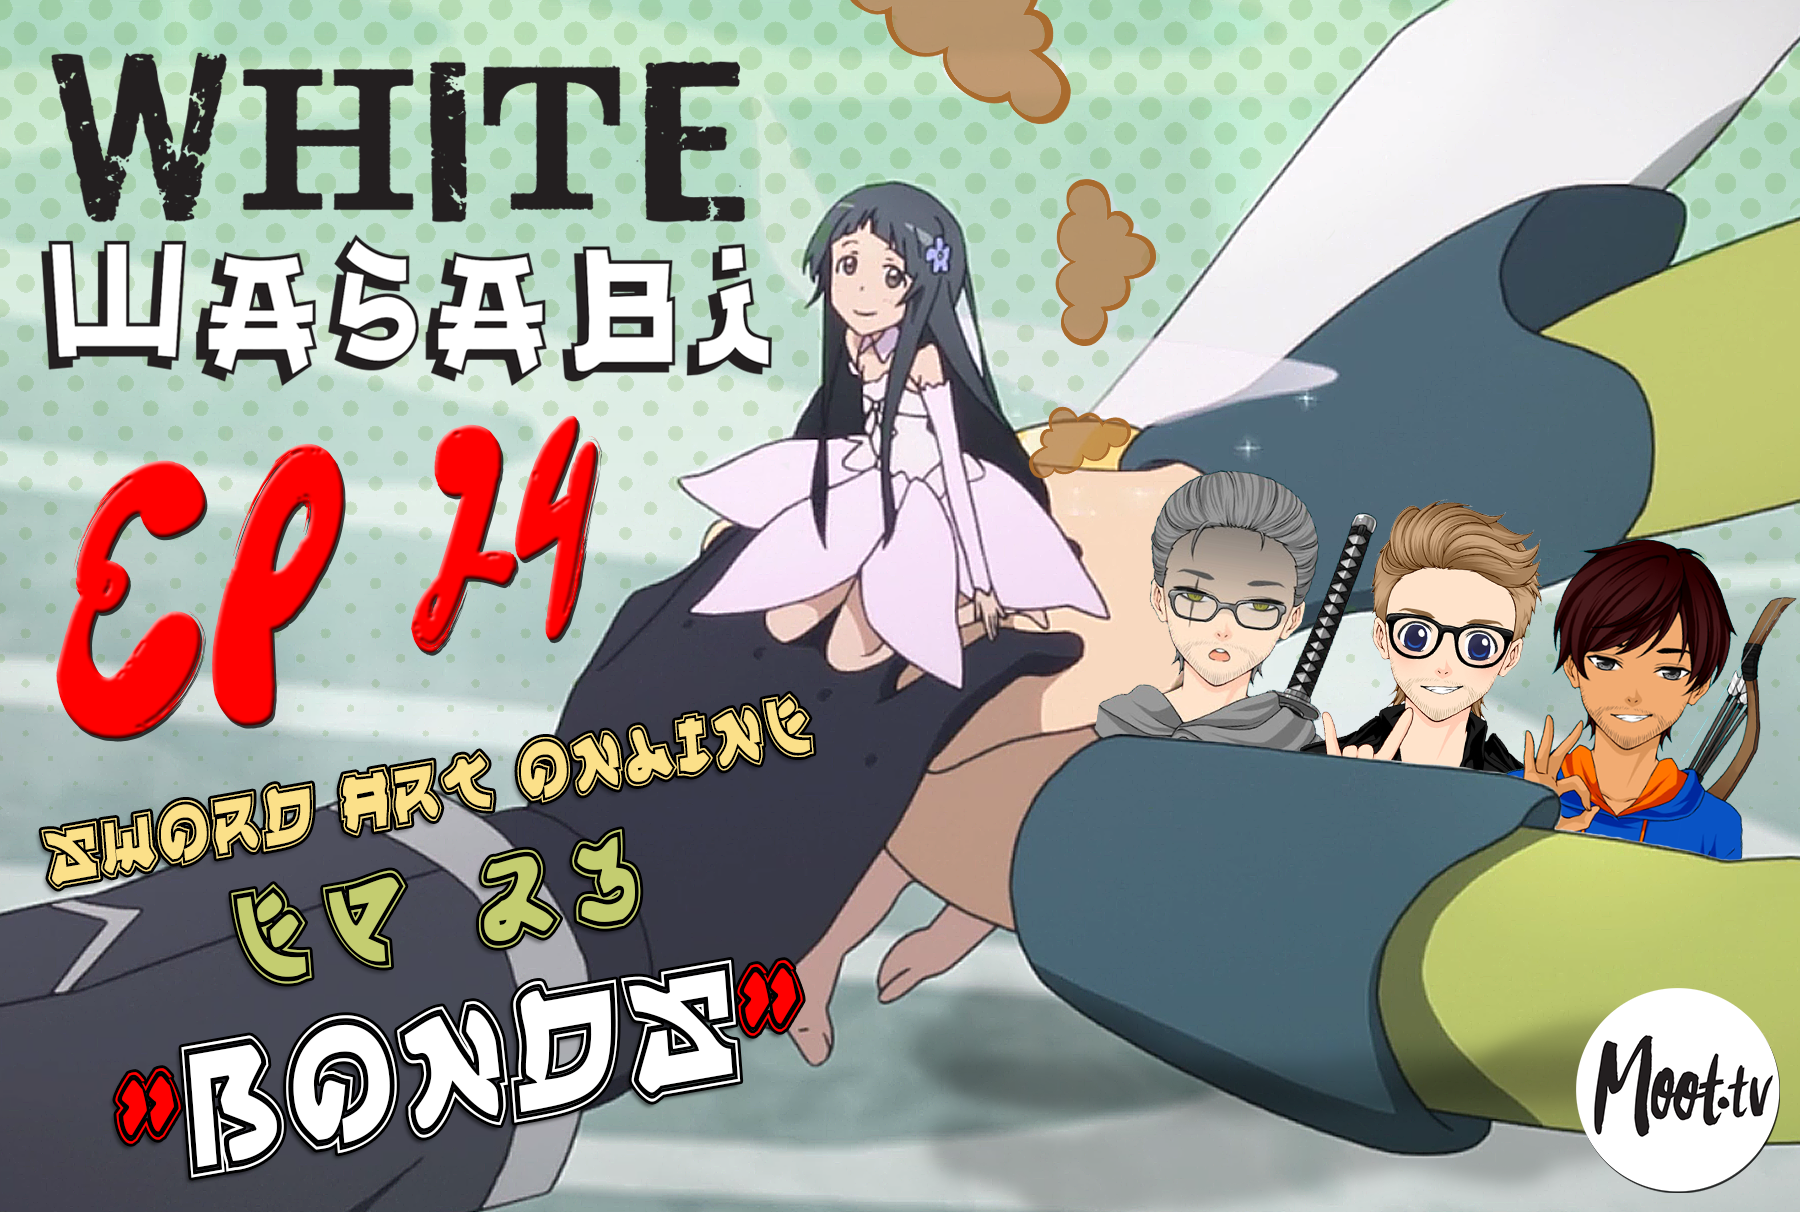 White Wasabi Ep24: Sword Art Online Ep 23 "Bonds"